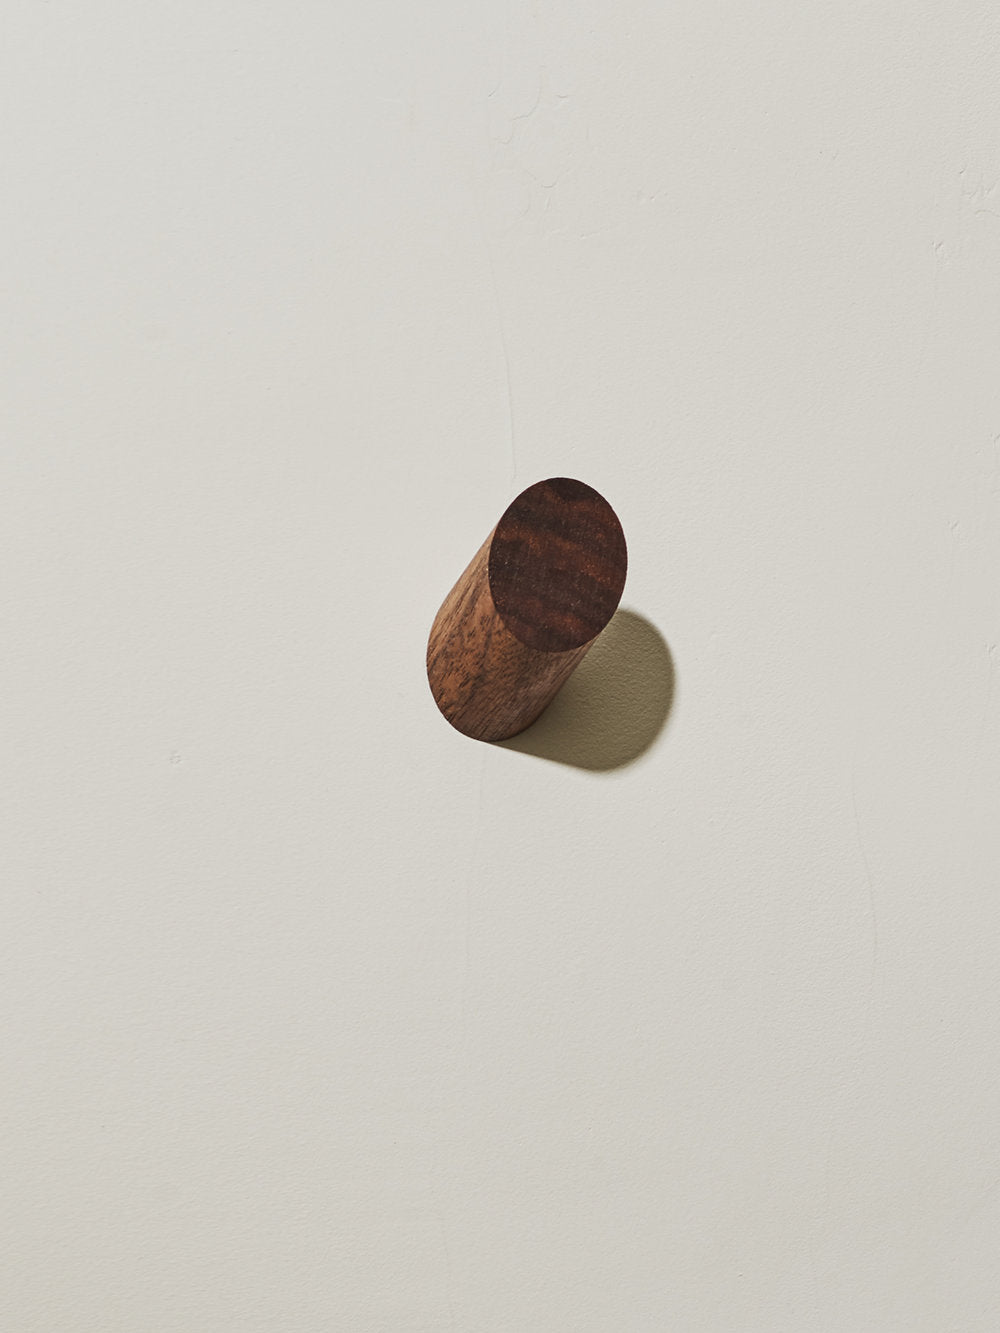 Single walnut parallax wall hook